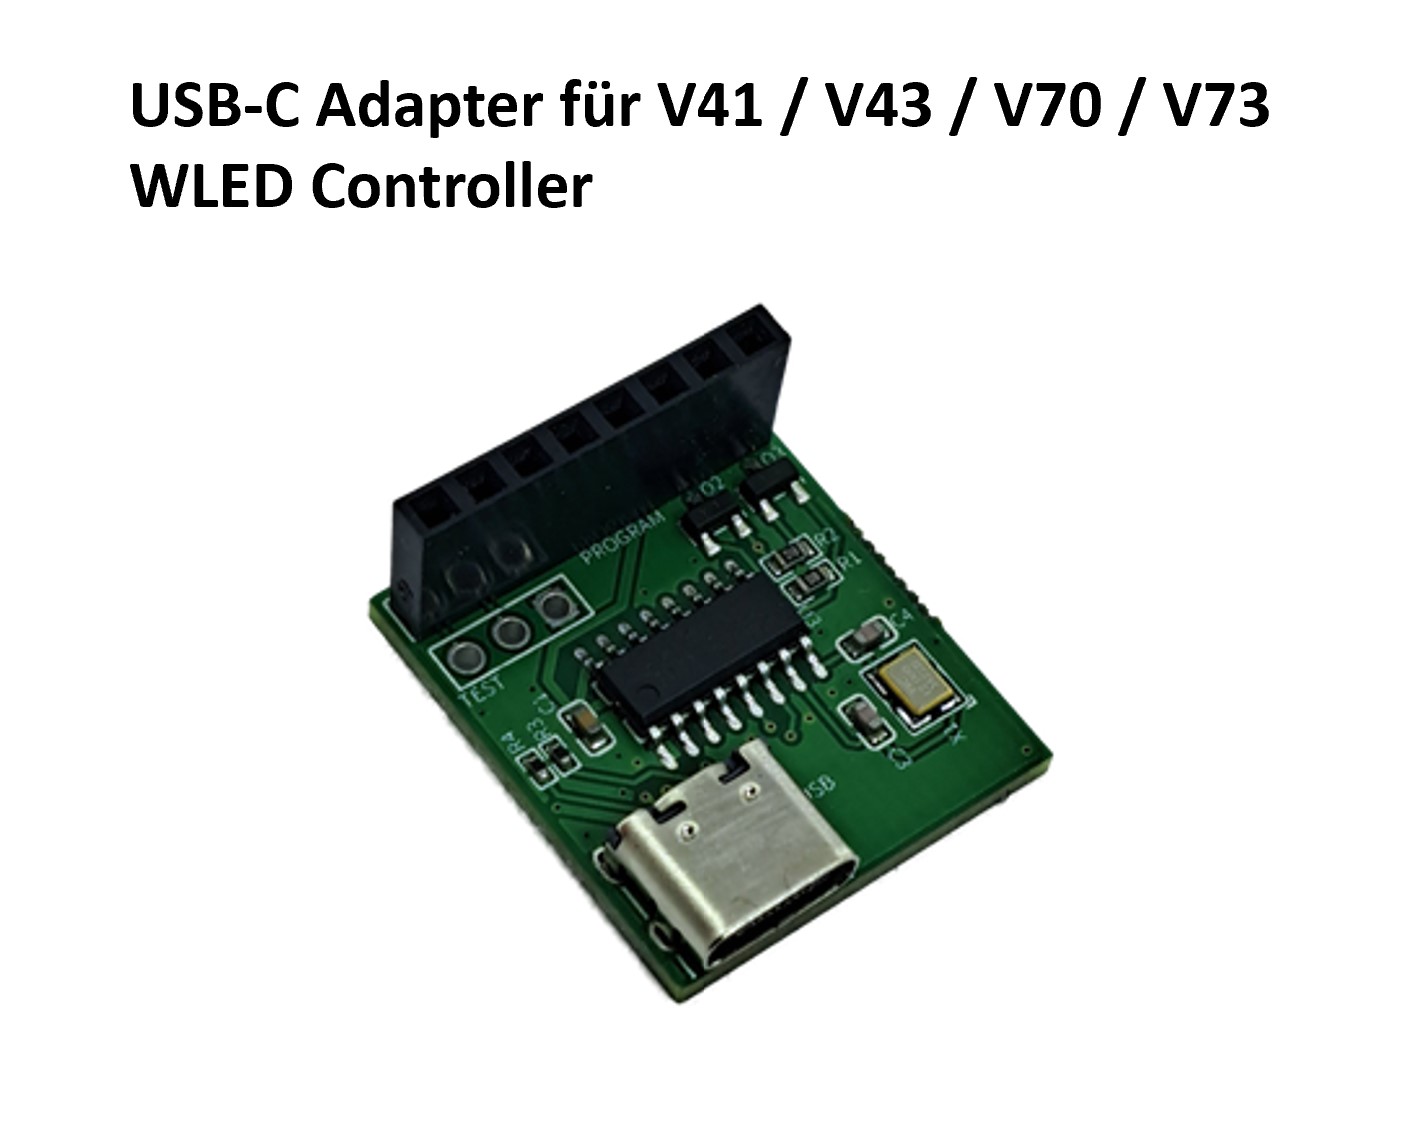 USB-C adapter for programming WLED controllers V41/V43/V70/V73